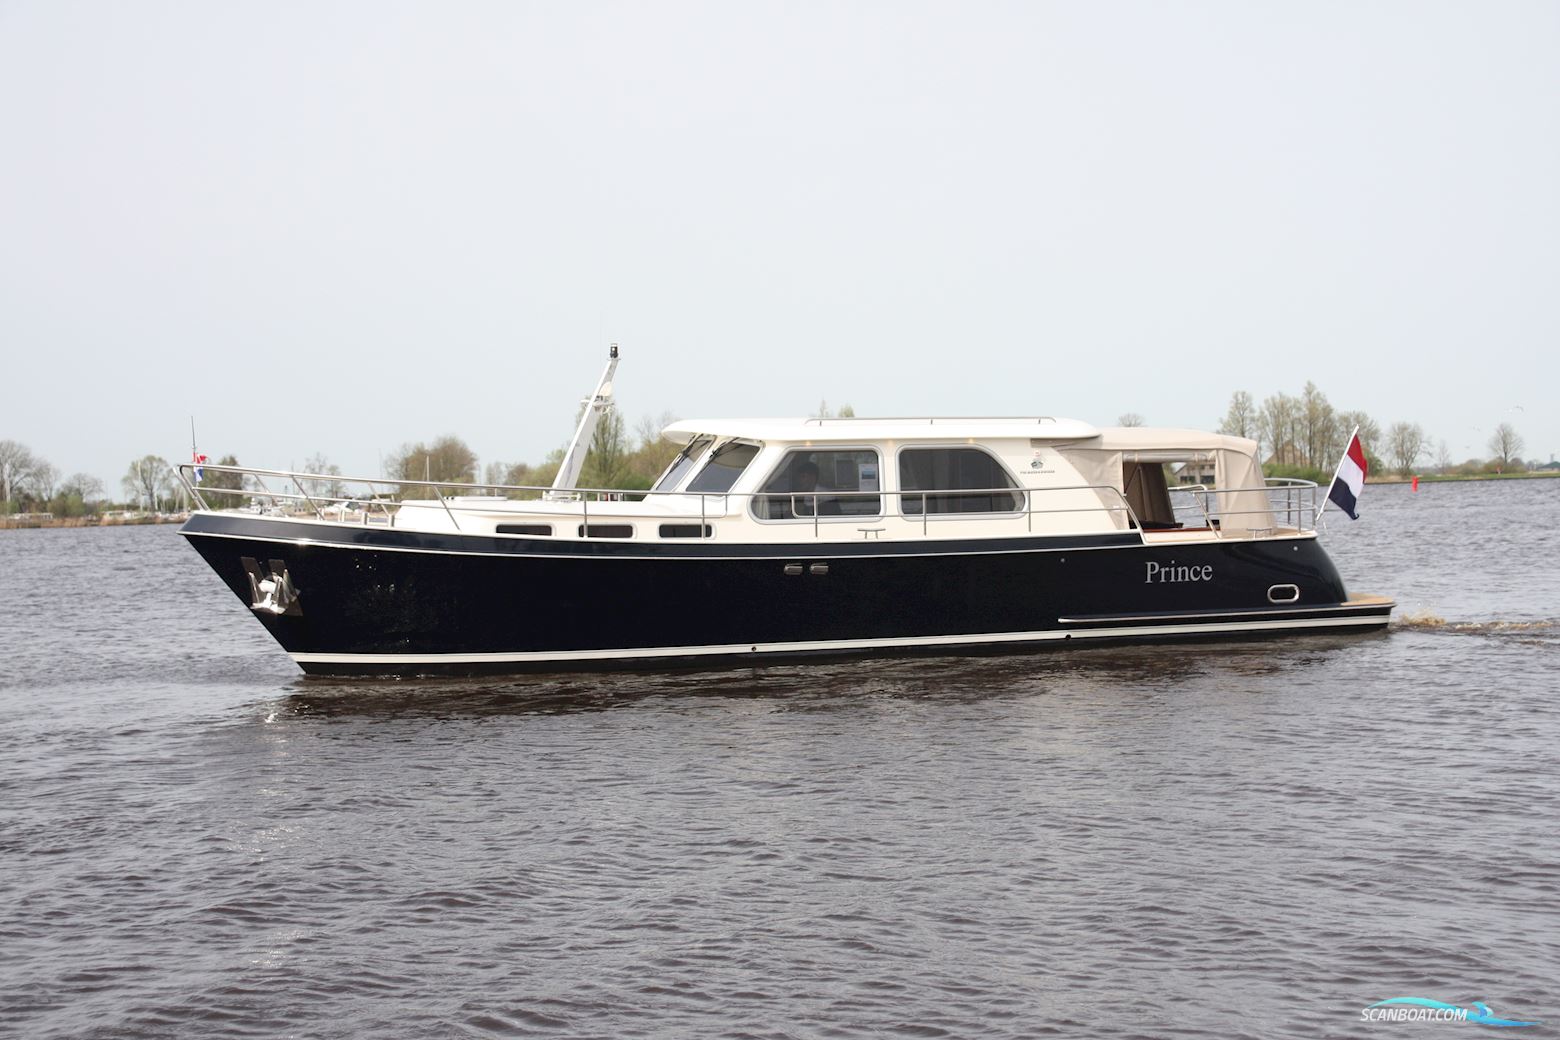 Pikmeerkruiser 44 OC Motor boat 2022, with Yanmar engine, The Netherlands